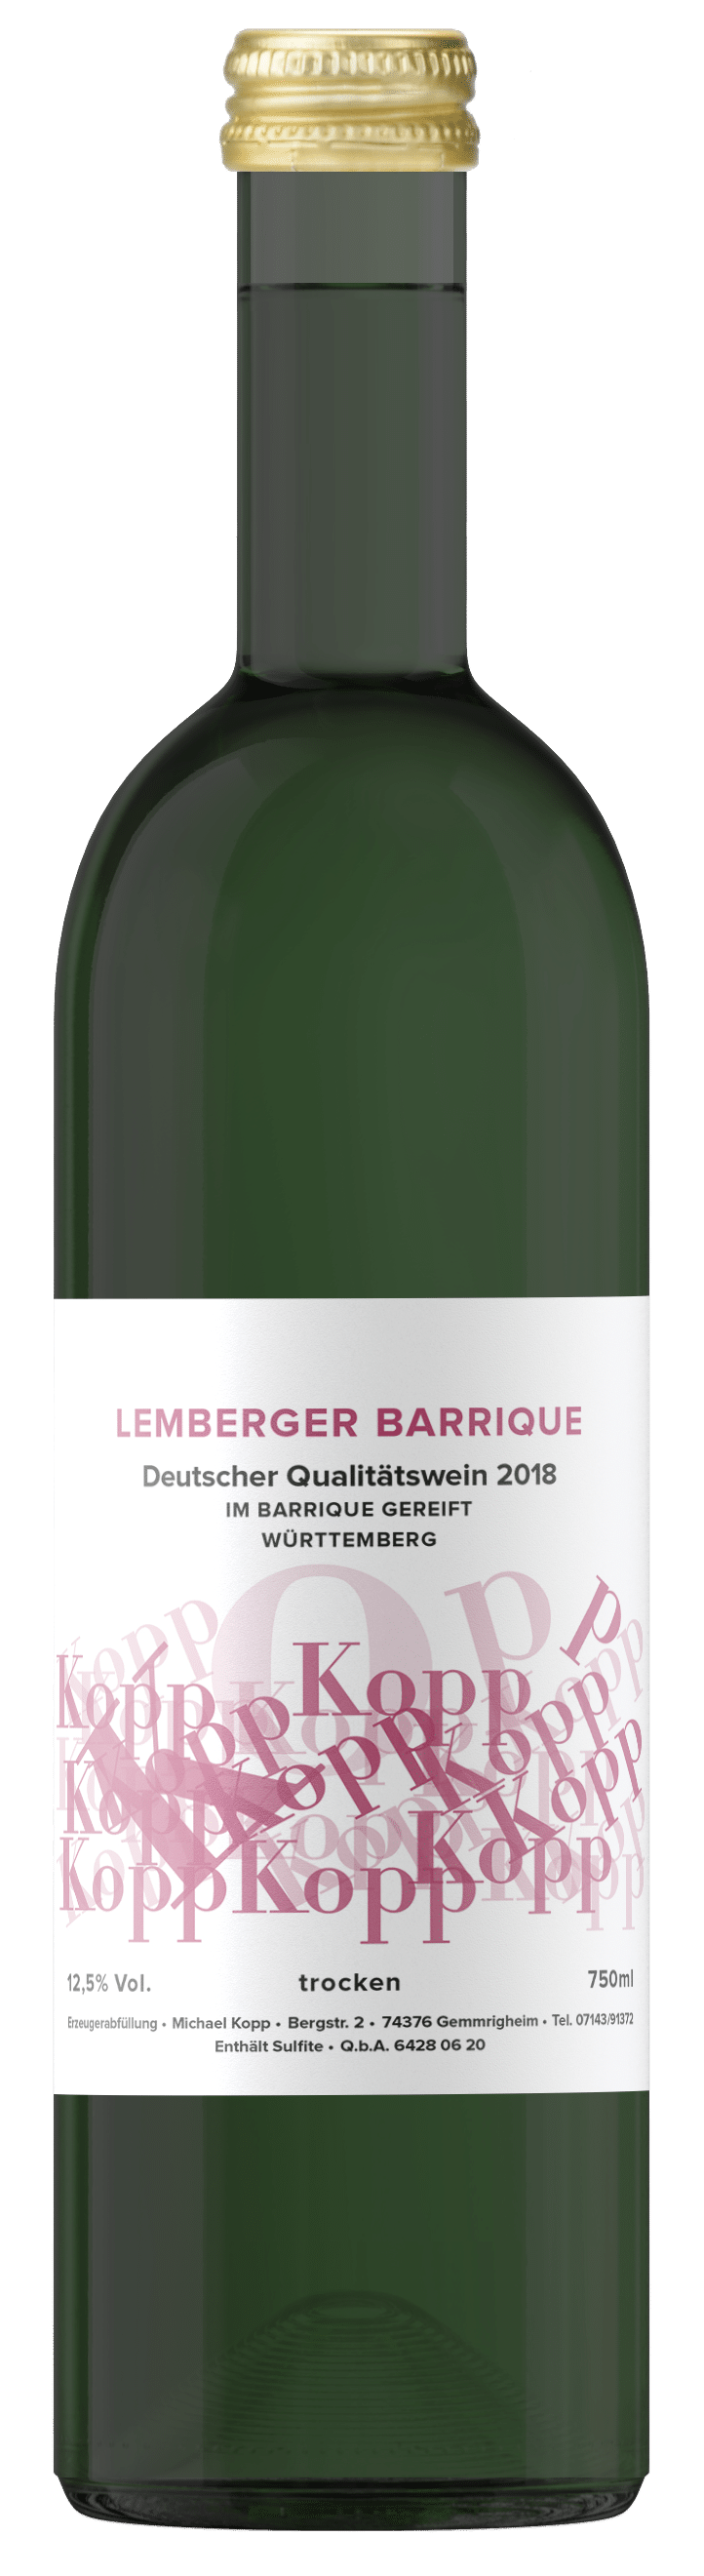 Lemberger Barrique 2018 trocken Weinbau Kopp